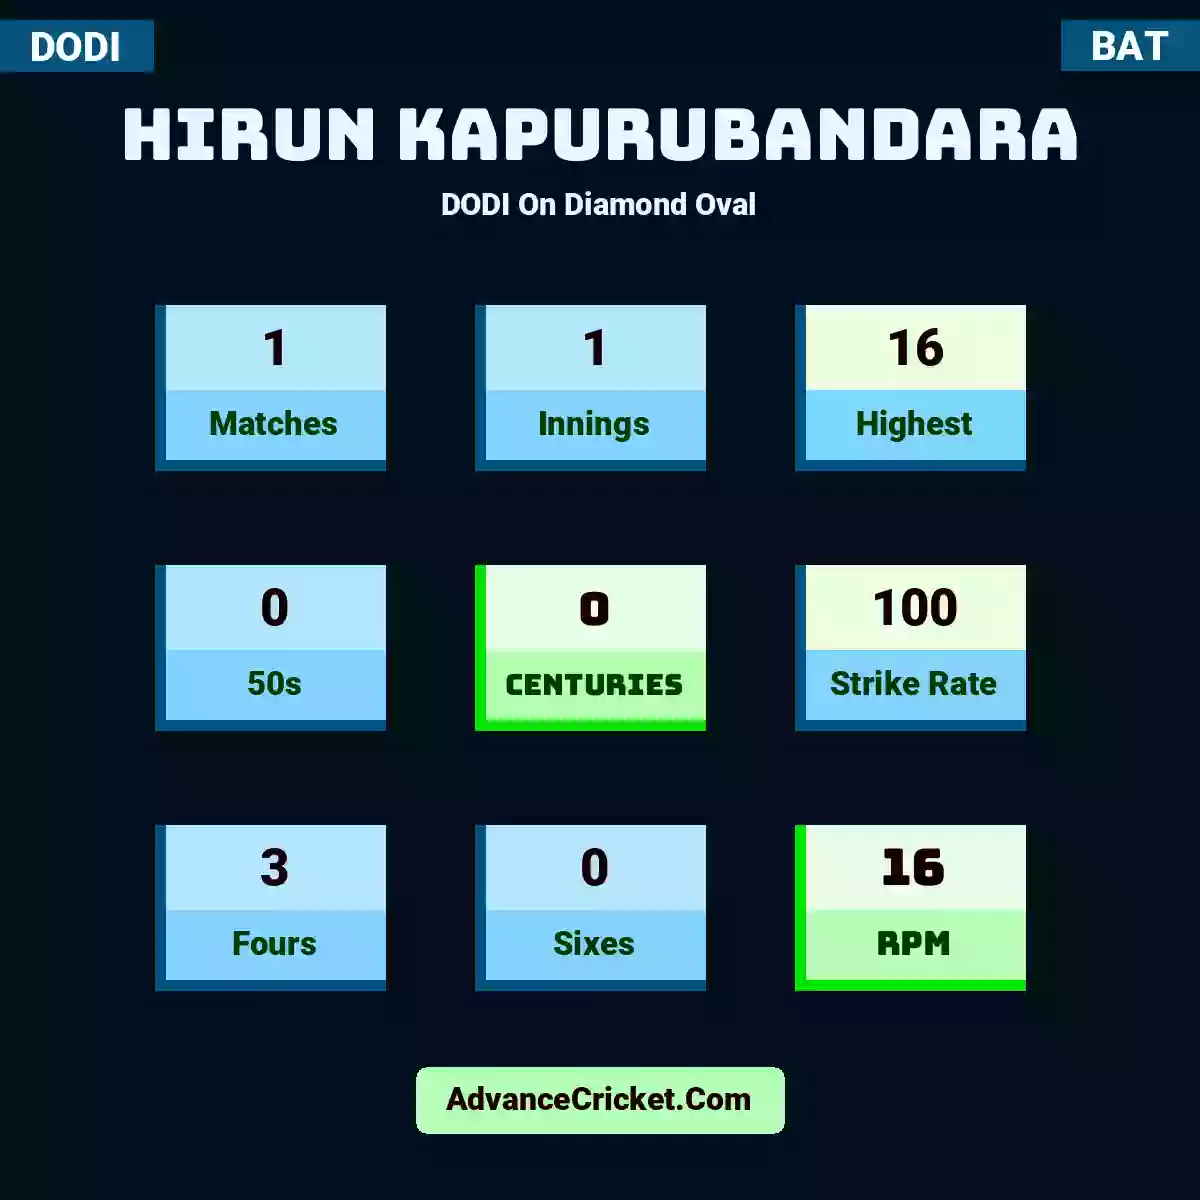 Hirun Kapurubandara DODI  On Diamond Oval, Hirun Kapurubandara played 1 matches, scored 16 runs as highest, 0 half-centuries, and 0 centuries, with a strike rate of 100. H.Kapurubandara hit 3 fours and 0 sixes, with an RPM of 16.